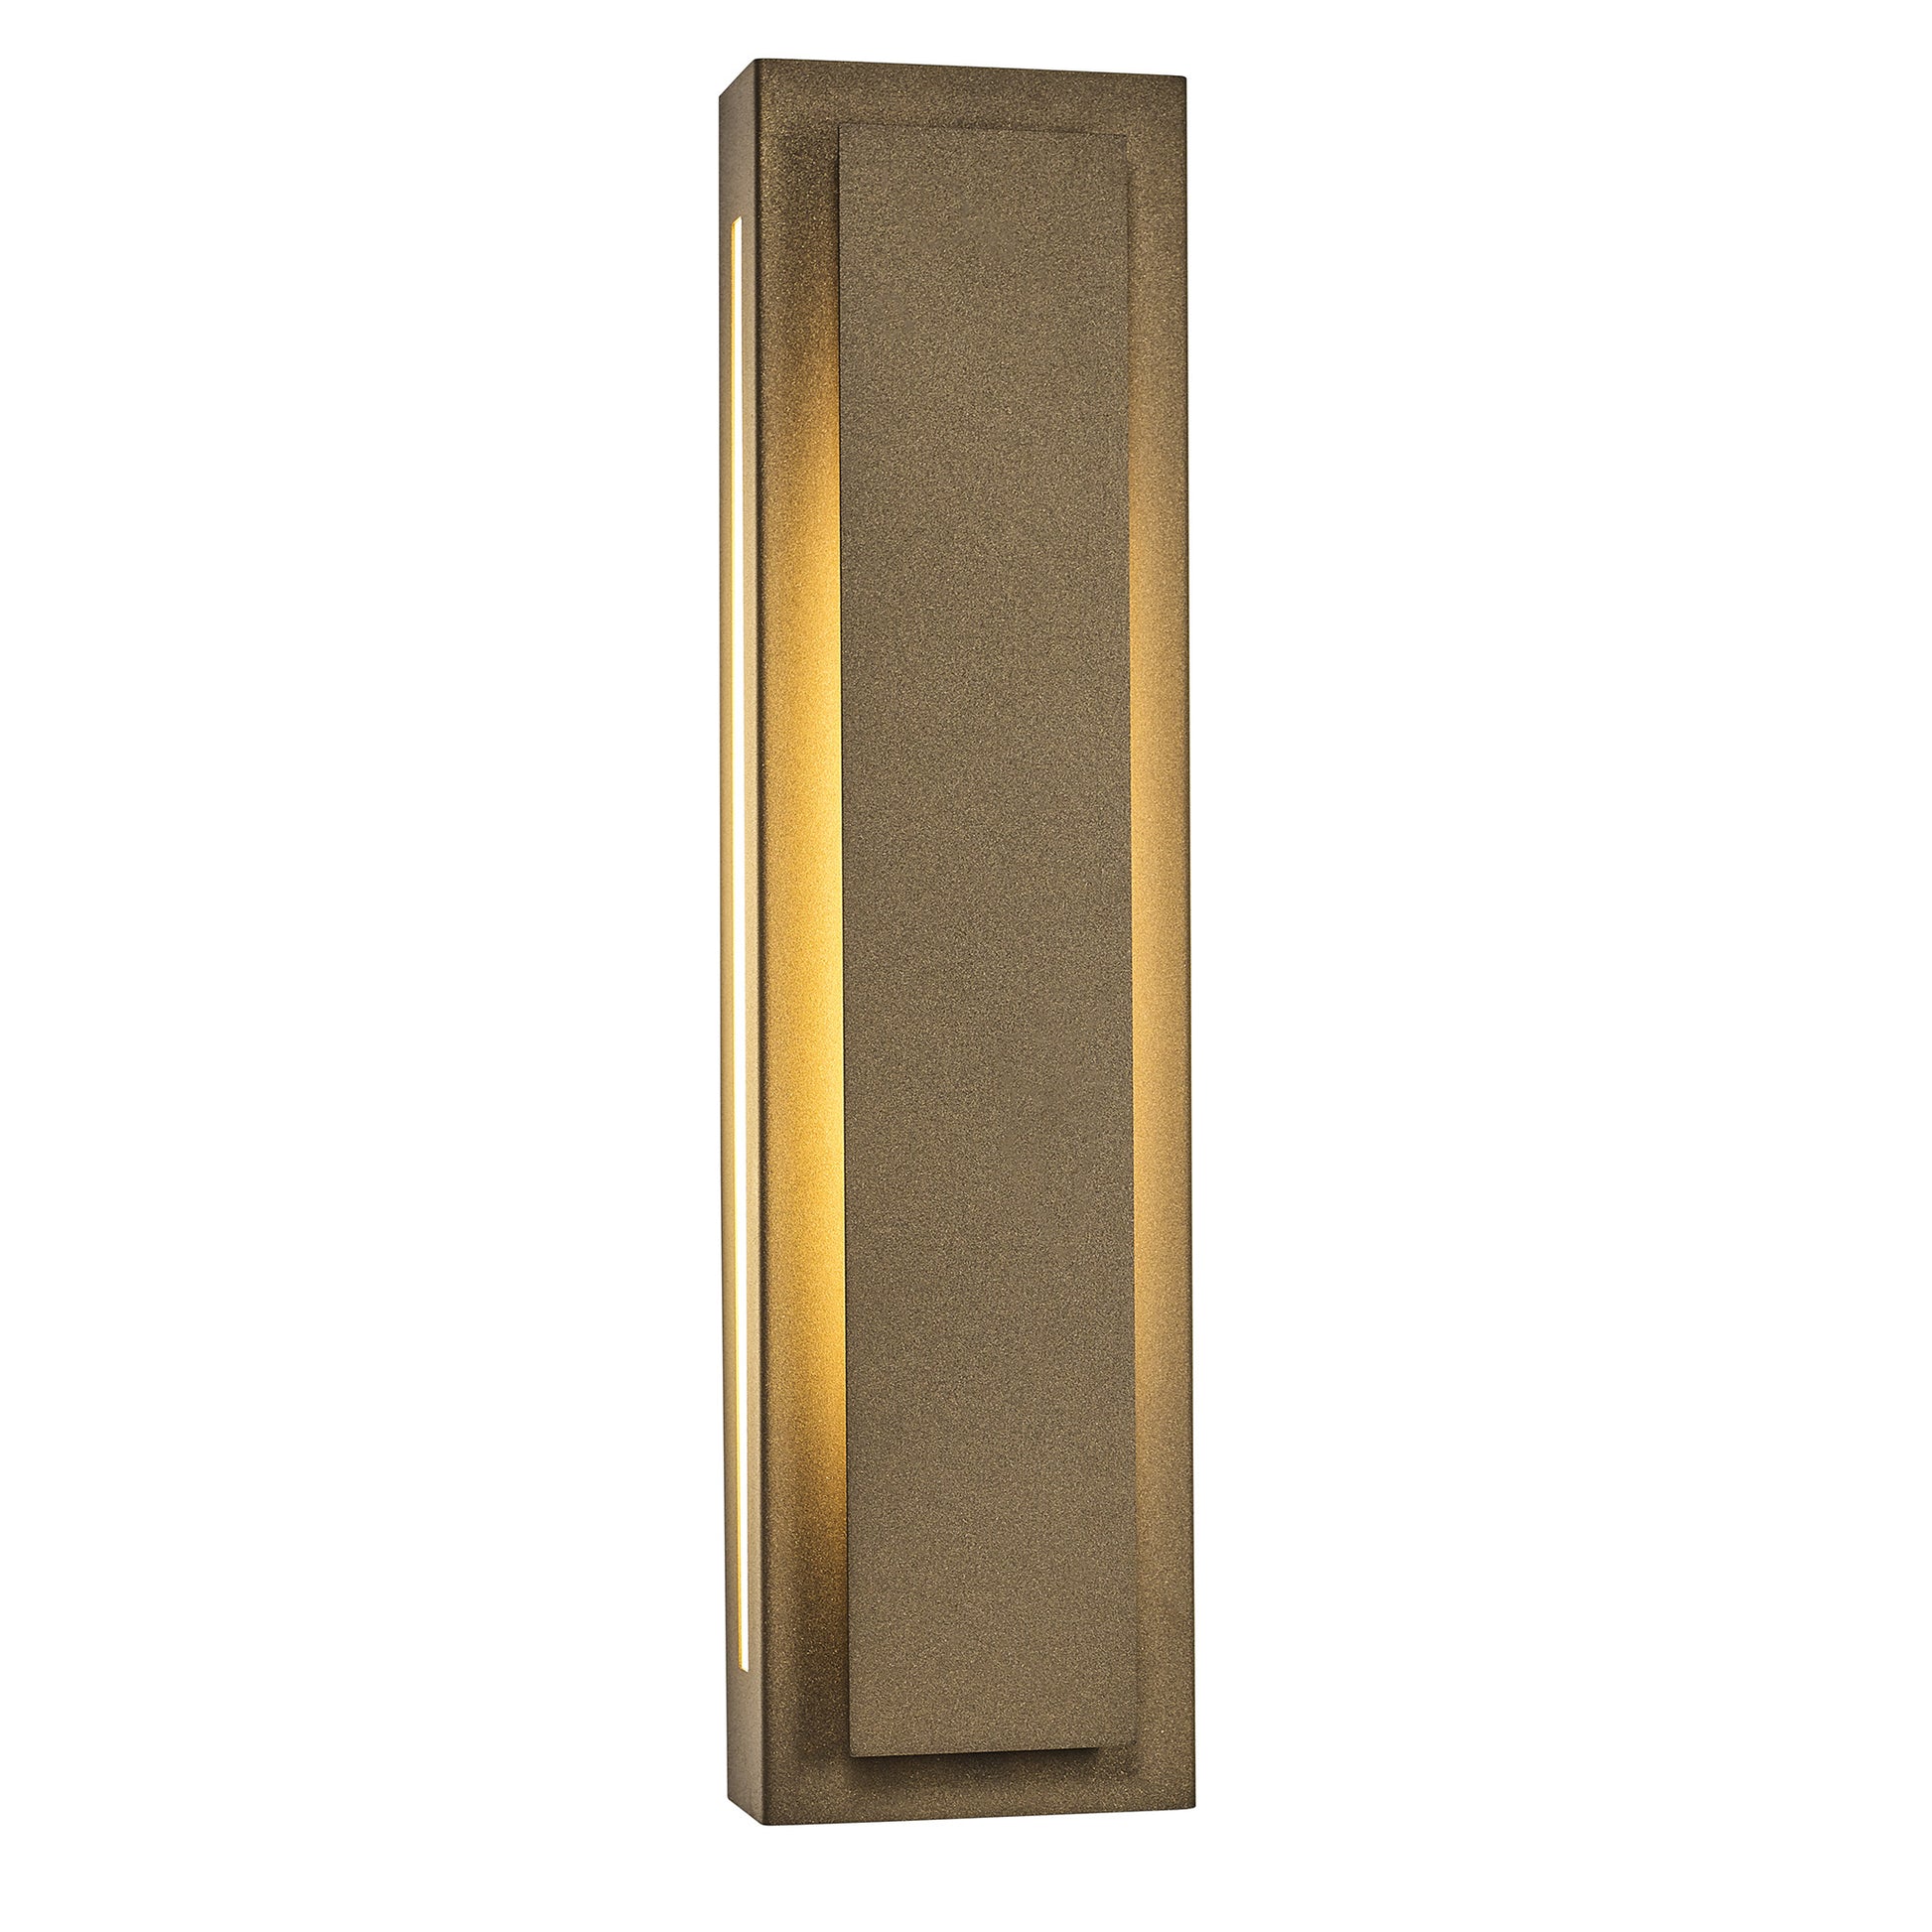 Invicta ADA Compliant Integrated LED Wall Sconce Cast Bronze